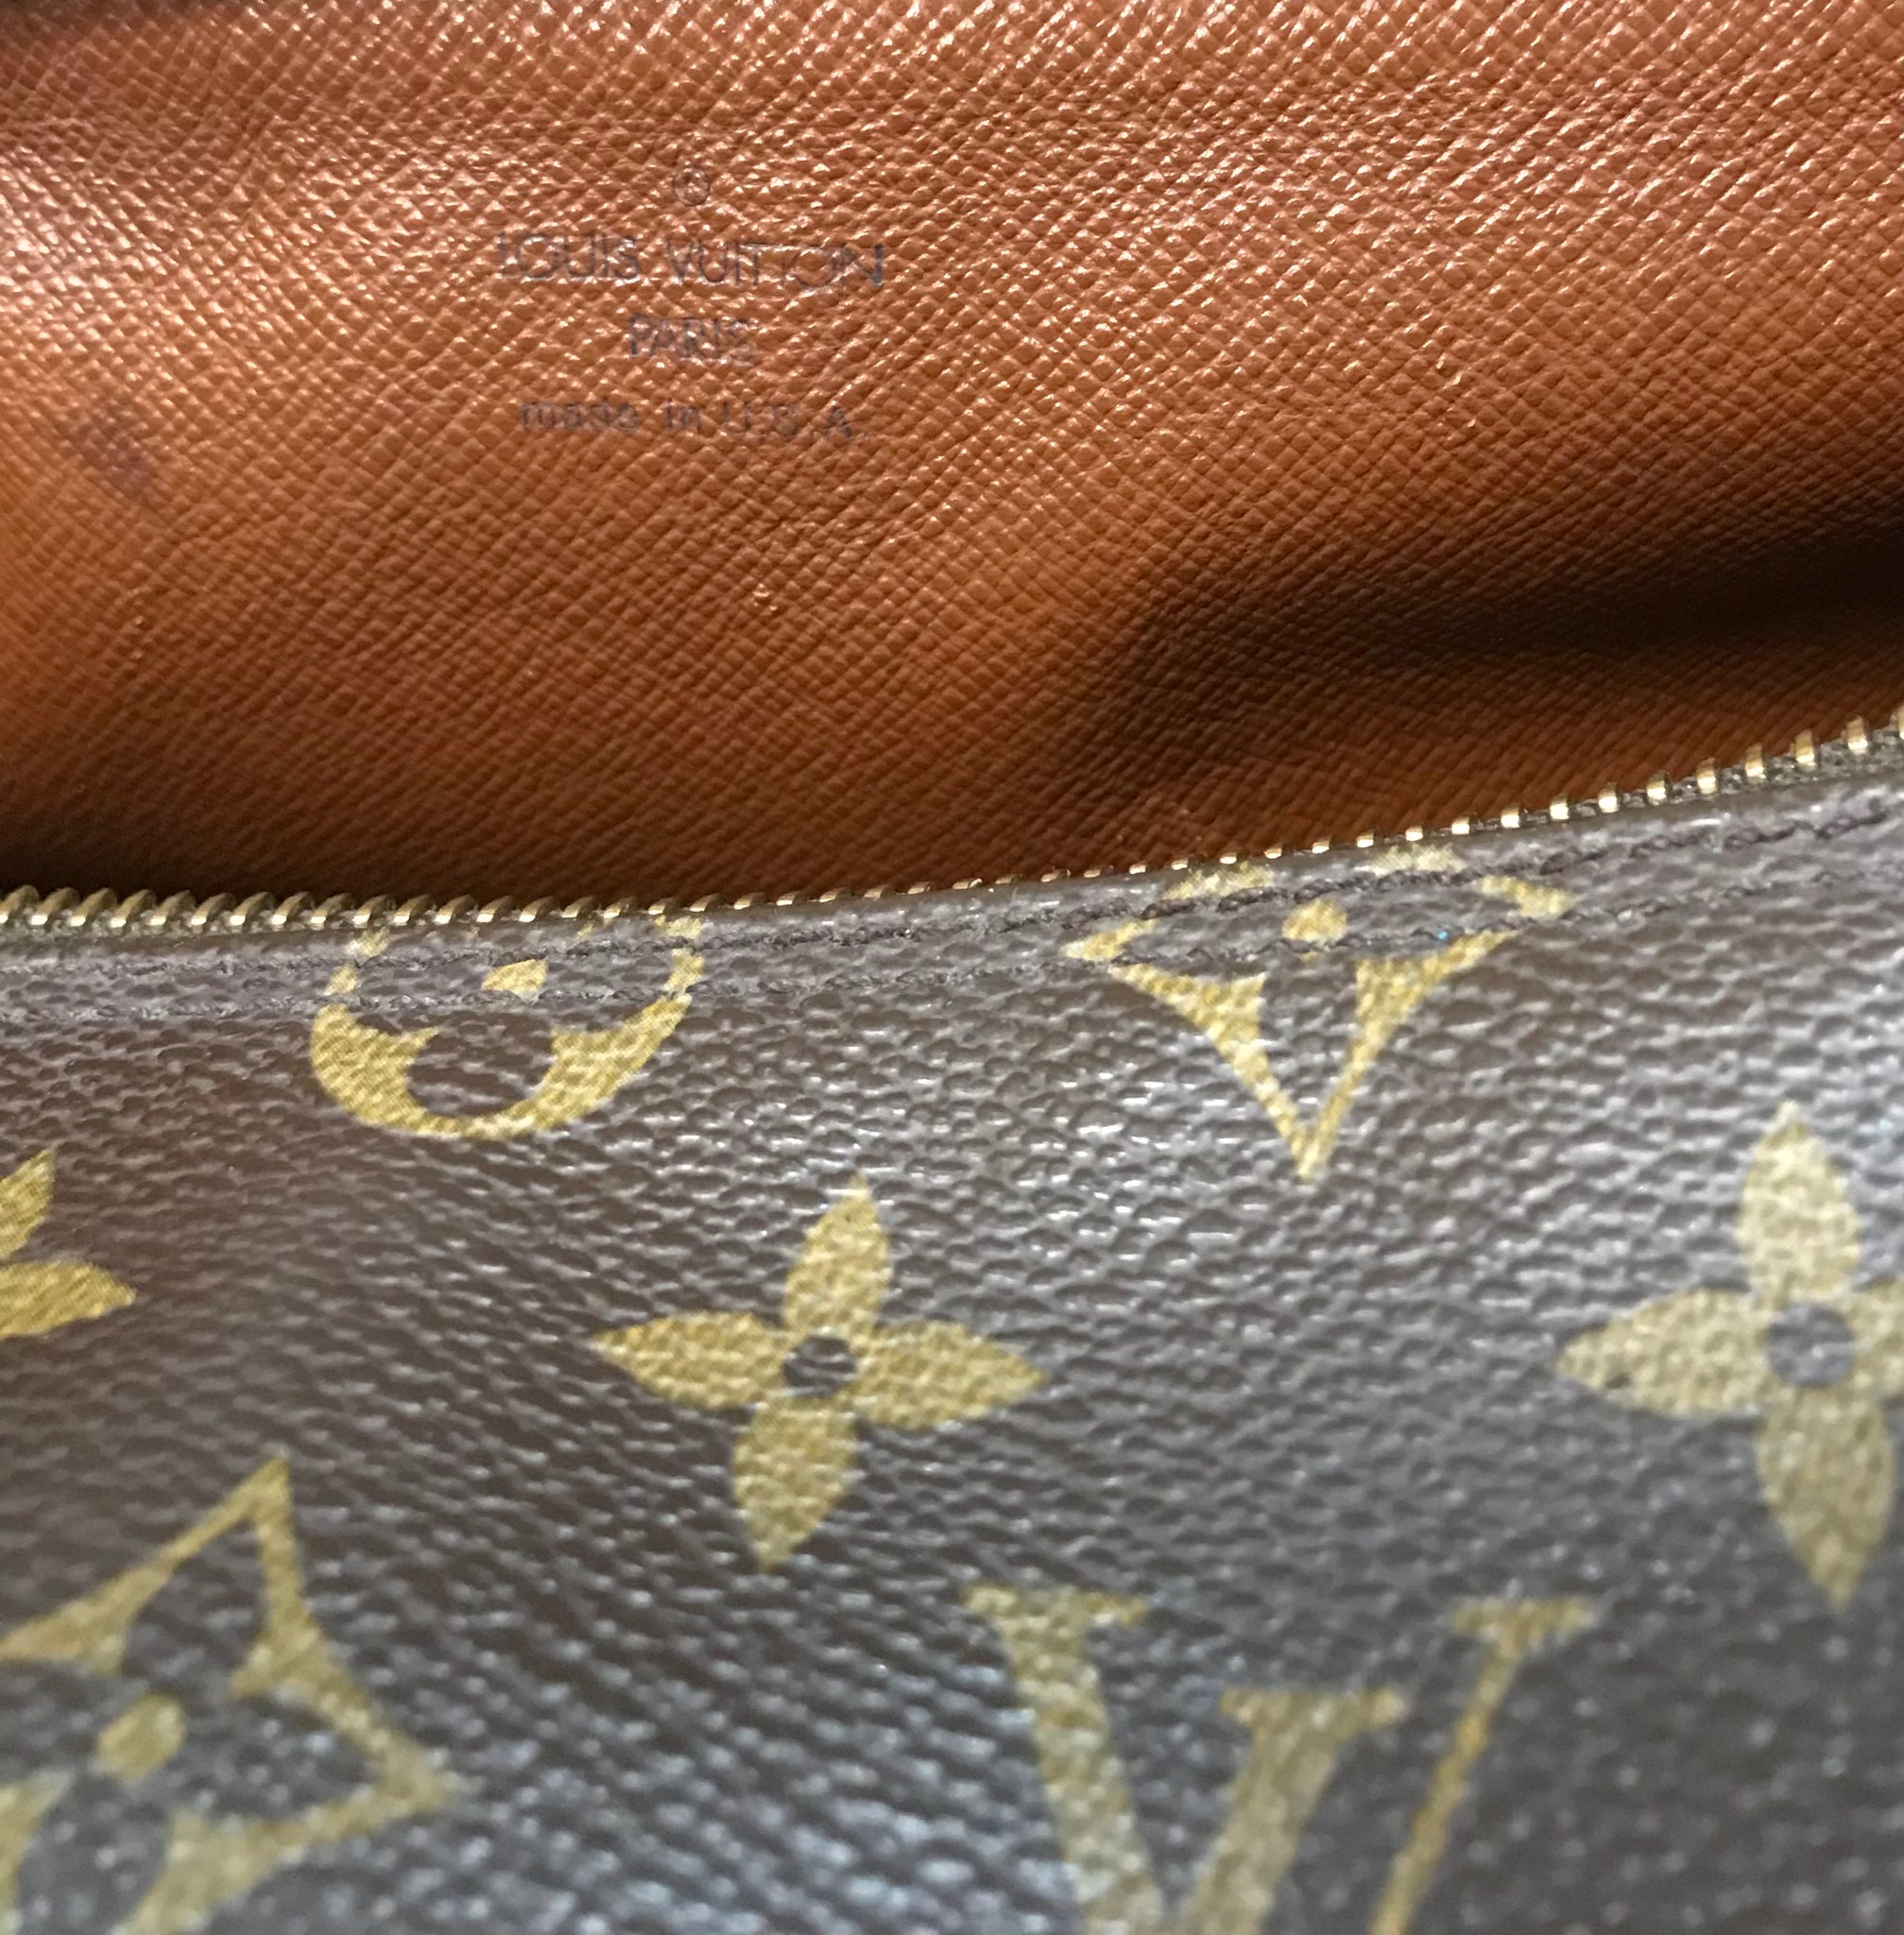 LOUIS VUITTON Monogram Papillon 26 Handbag – PETIT